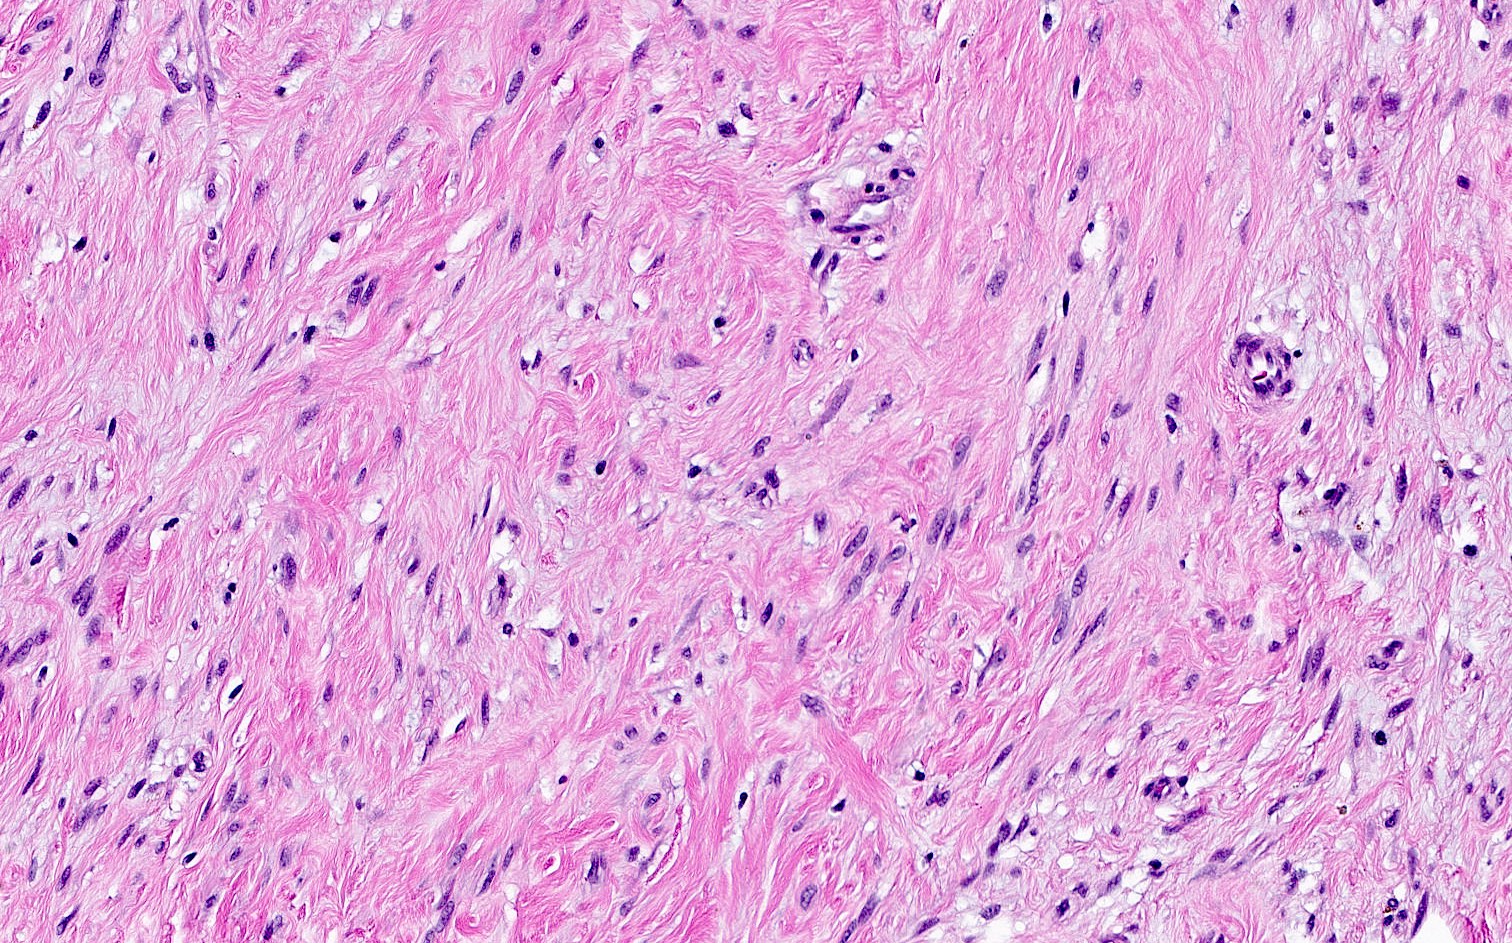 Hypocellular, collagenized / fibrous variant